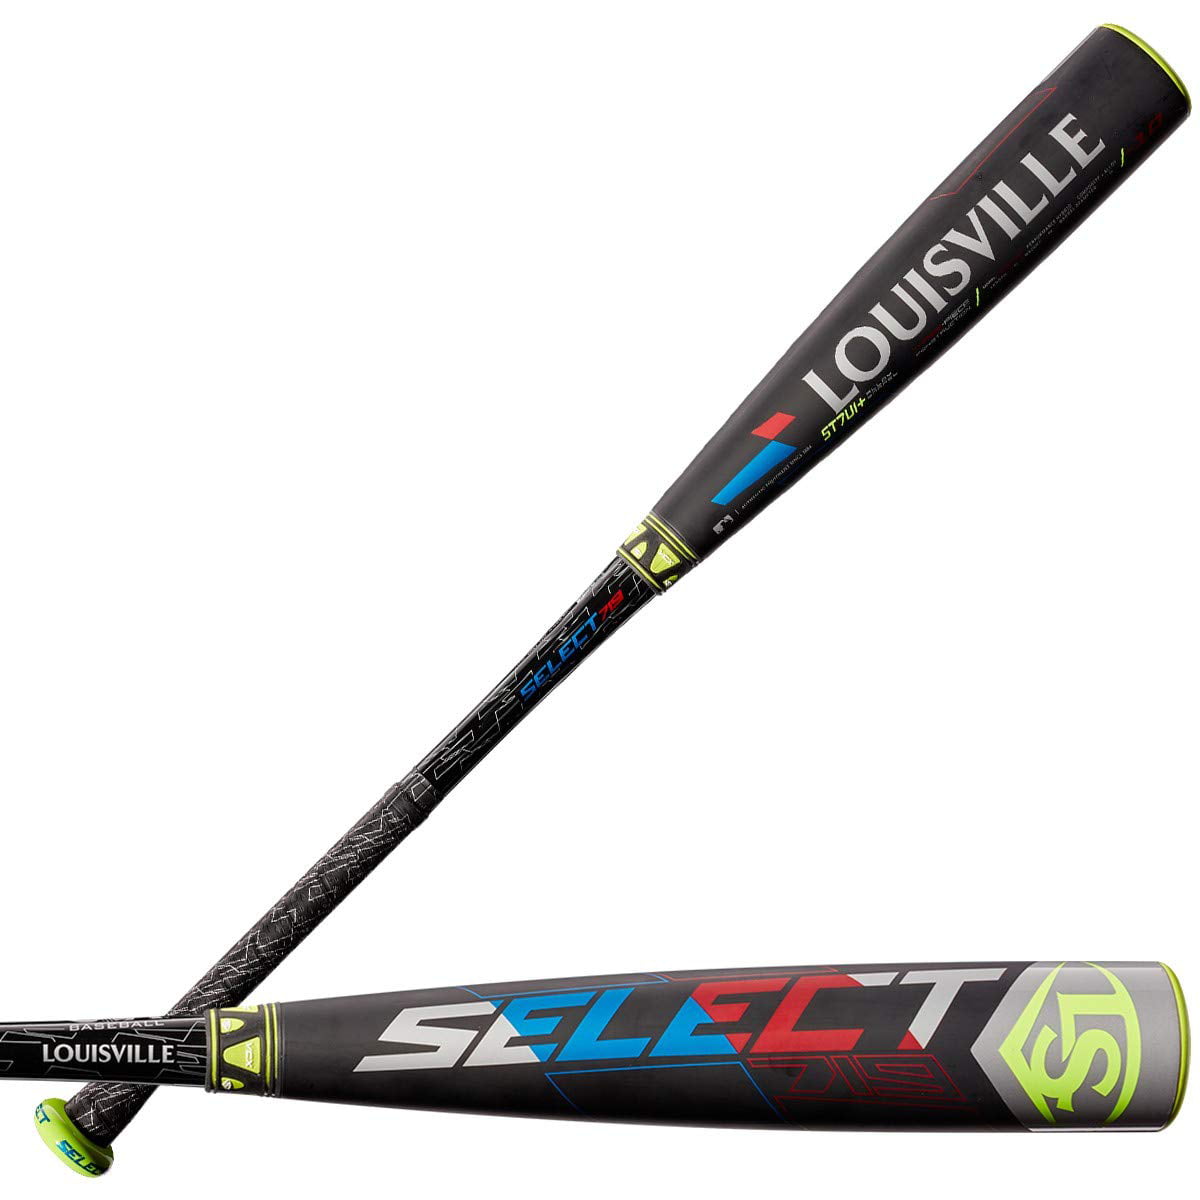 Louisville Slugger Select 719 USA Baseball Bat for sale online 